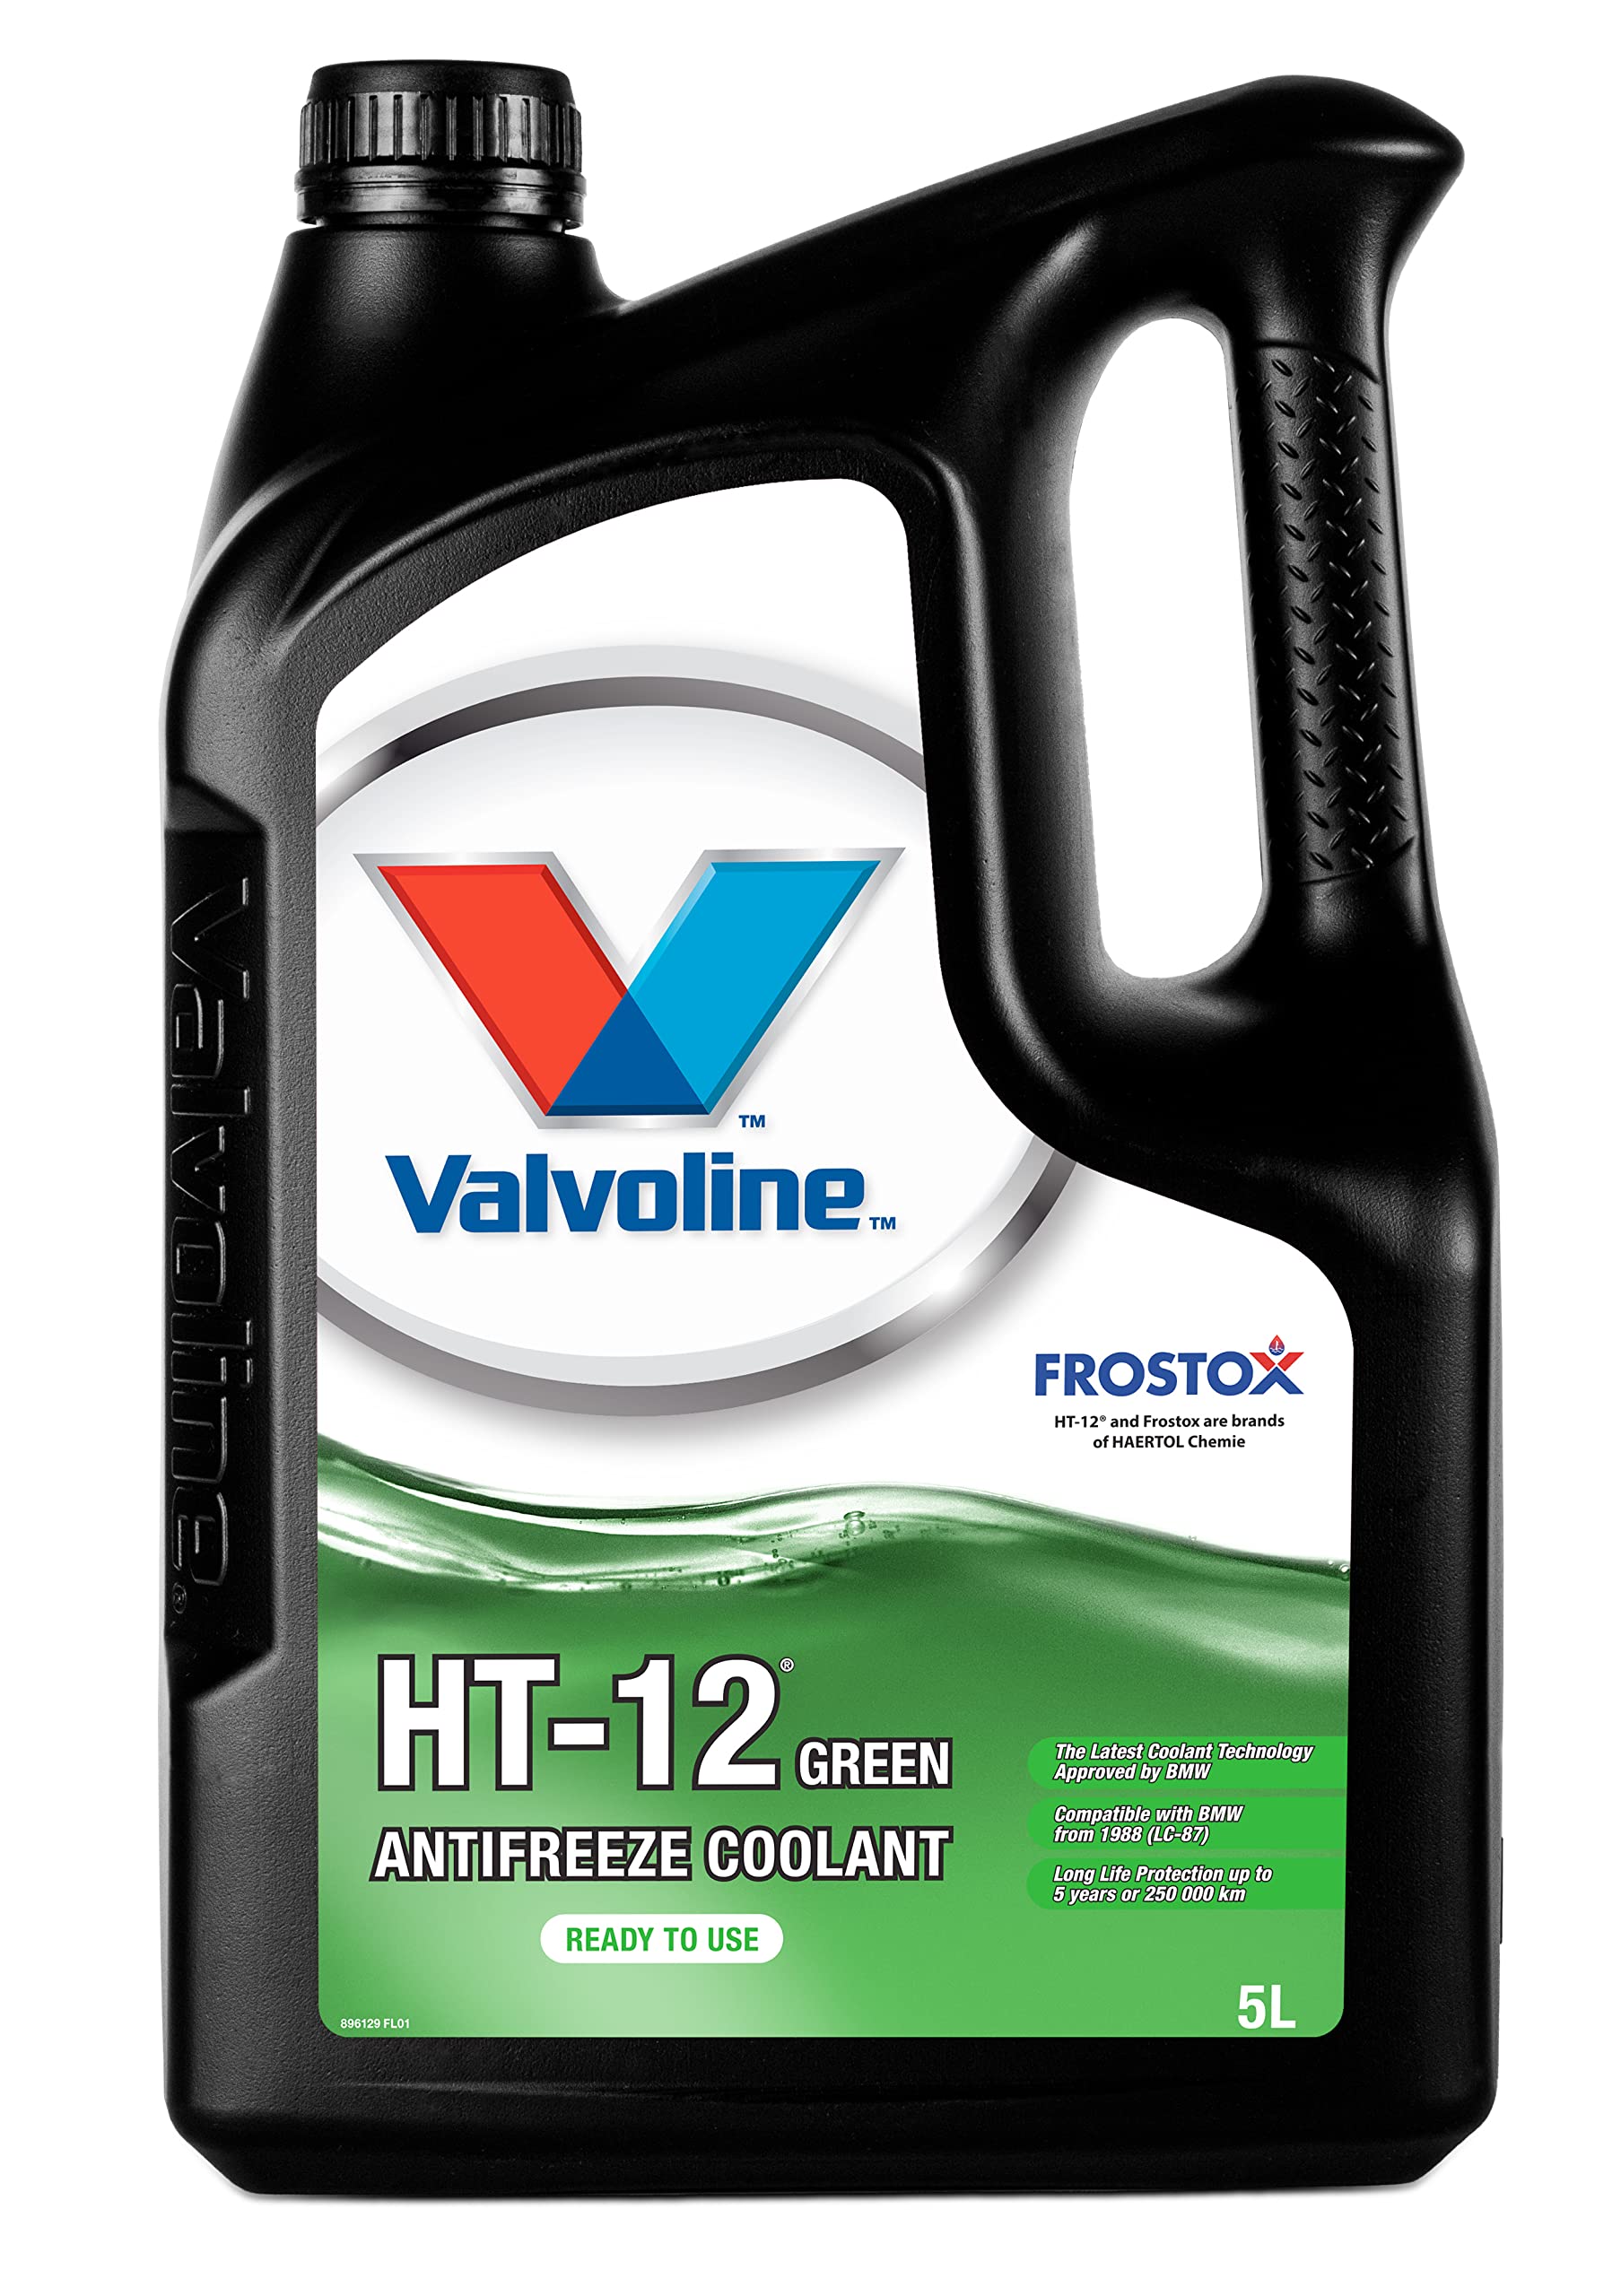 Valvoline Antifreeze Coolant HT-12 Green Ready-to-Use, 5L von Valvoline